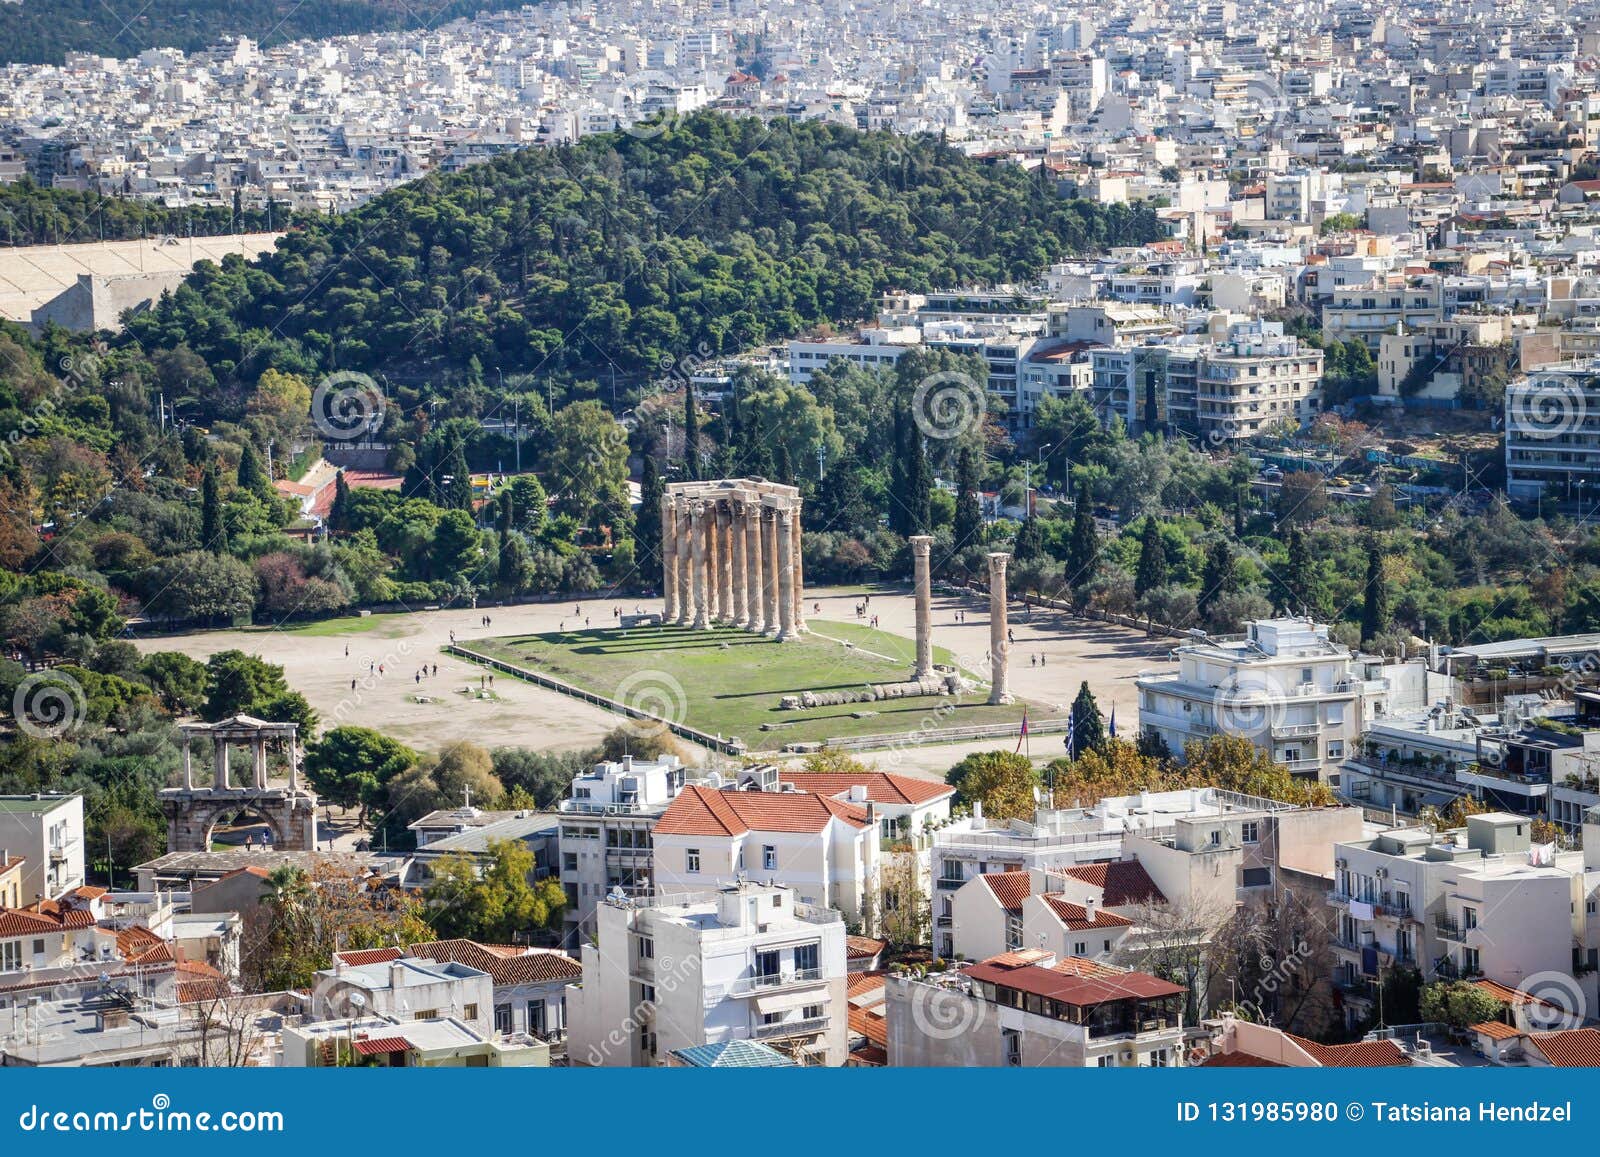 Greece capital